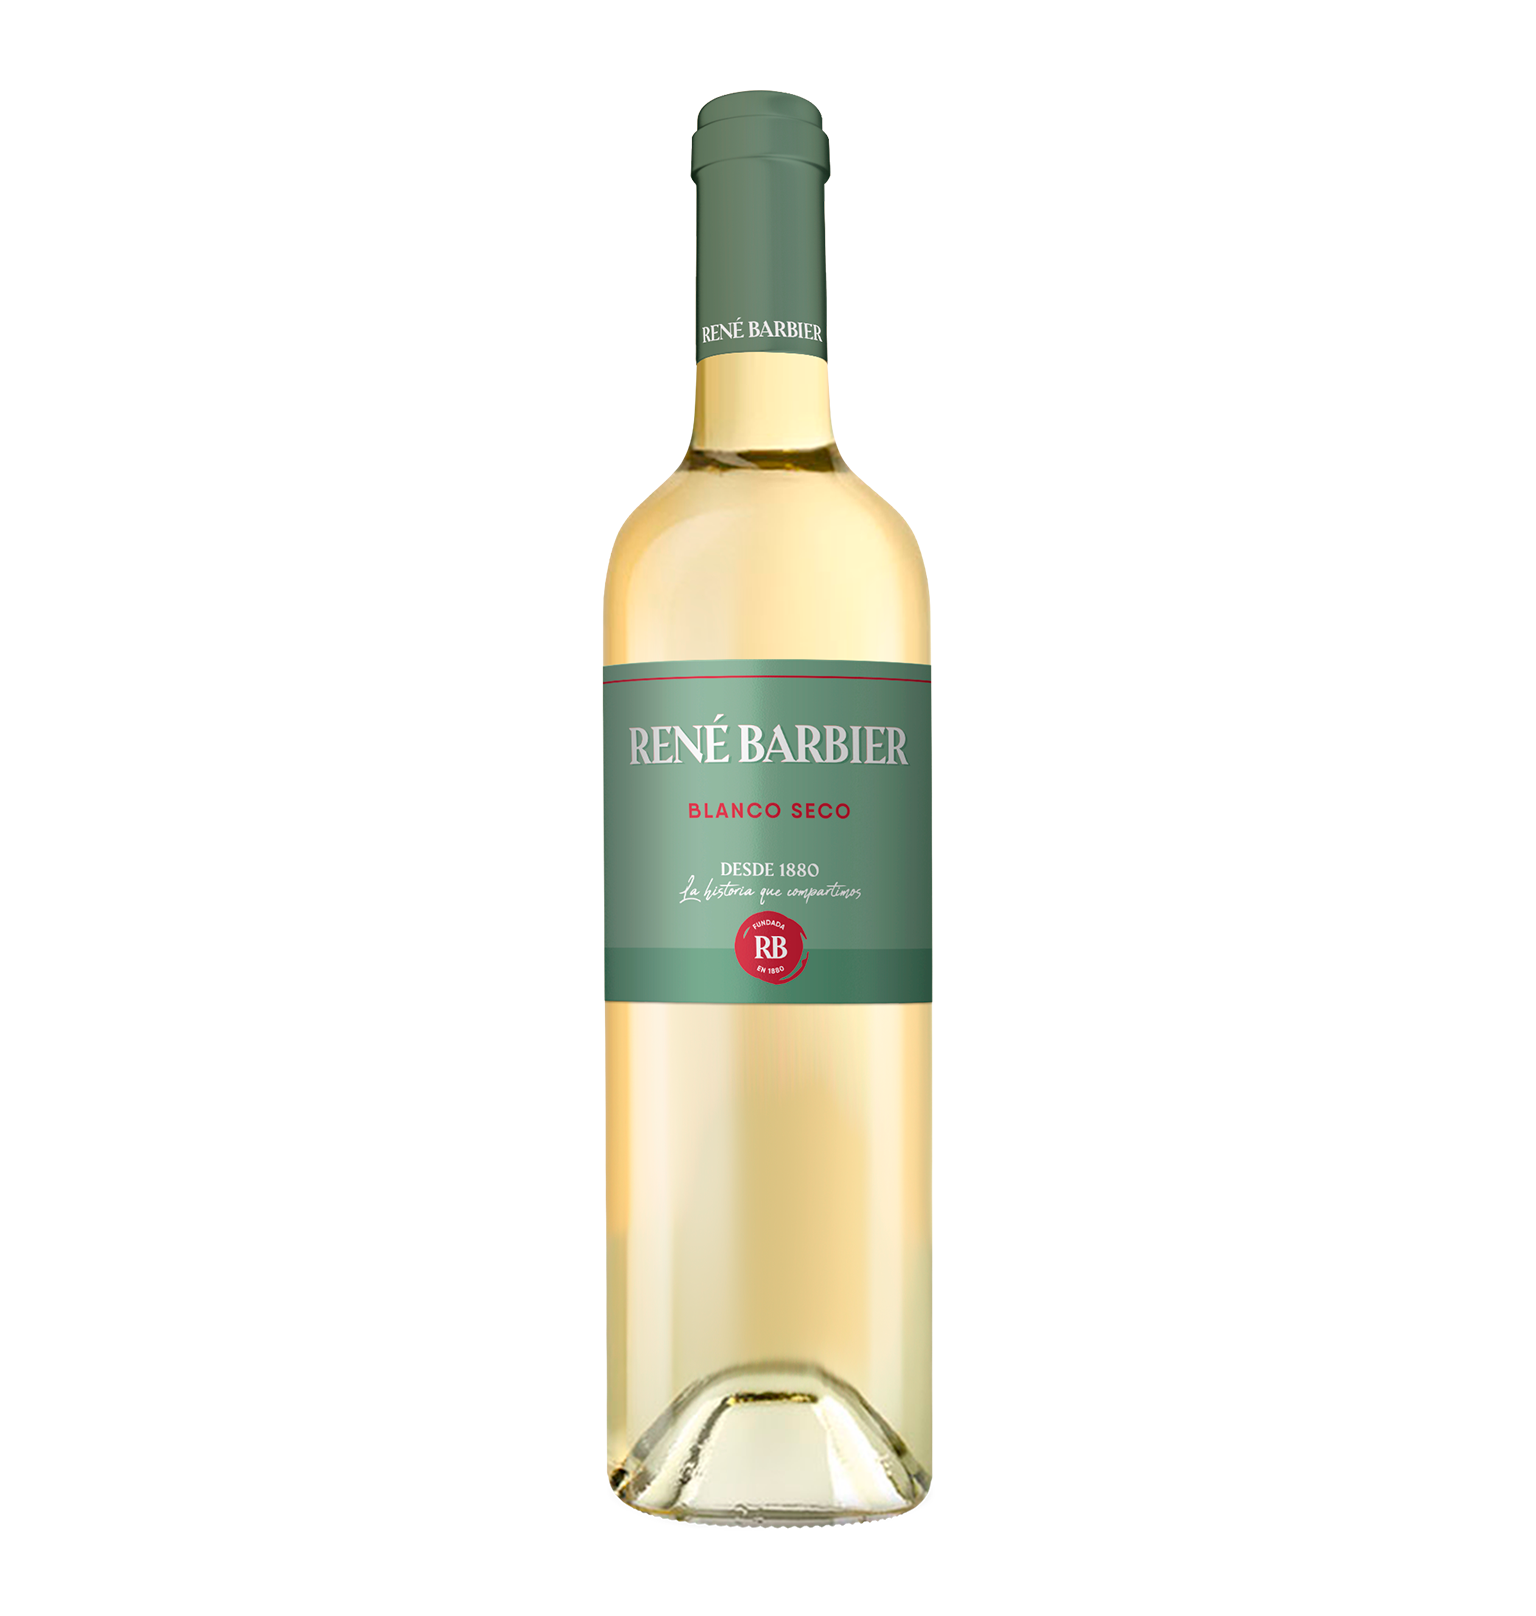 René Barbier vino Blanco Seco